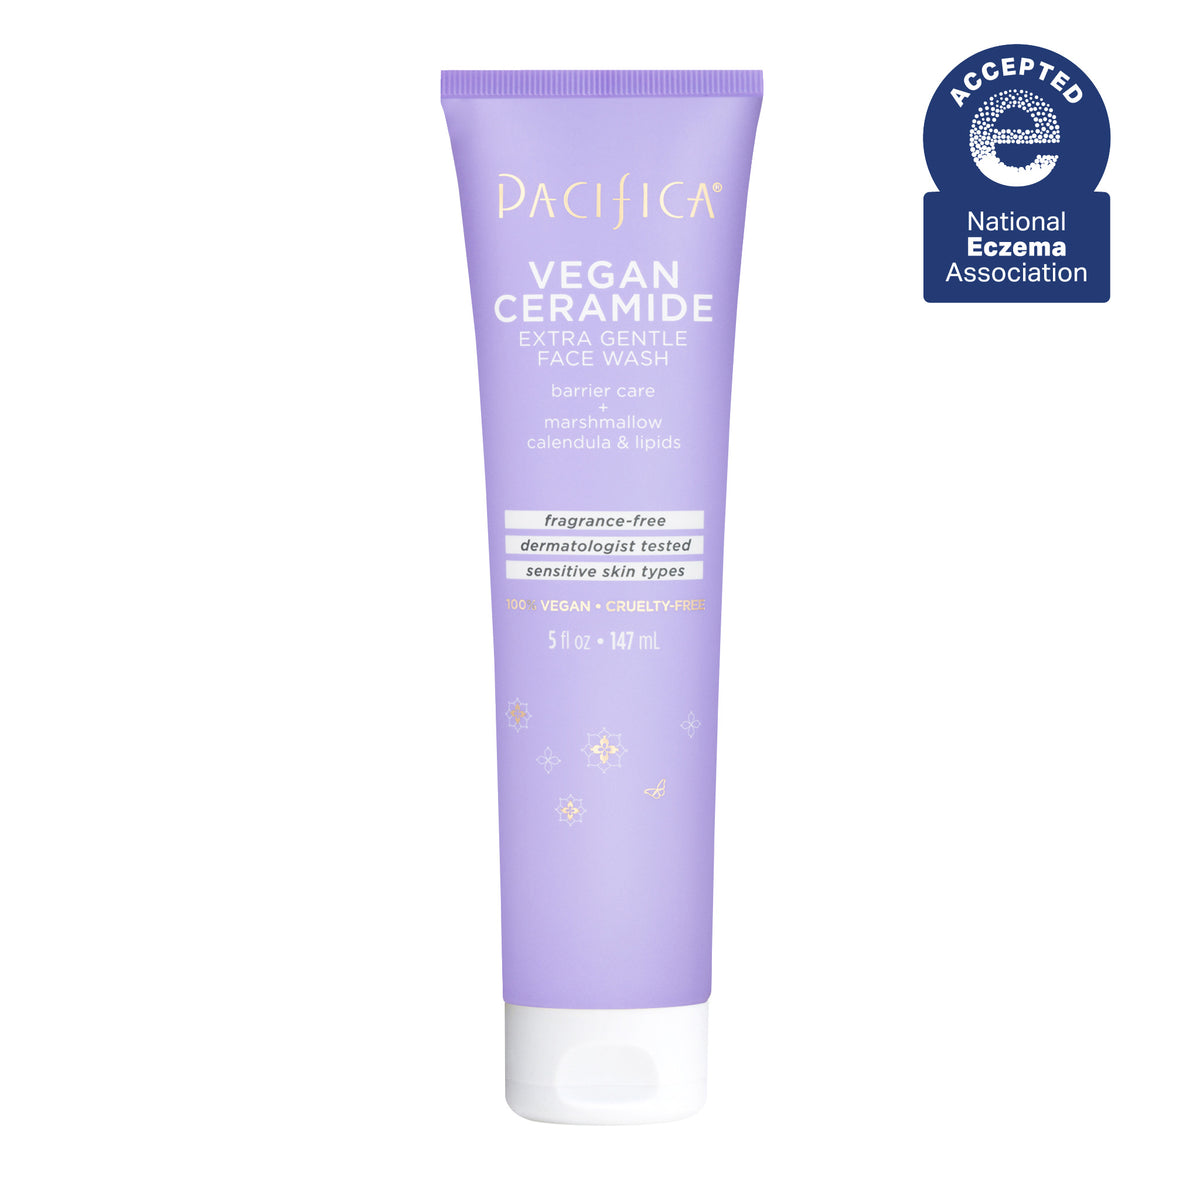 Vegan Ceramide Extra Gentle Face Wash - Skin Care - Pacifica Beauty